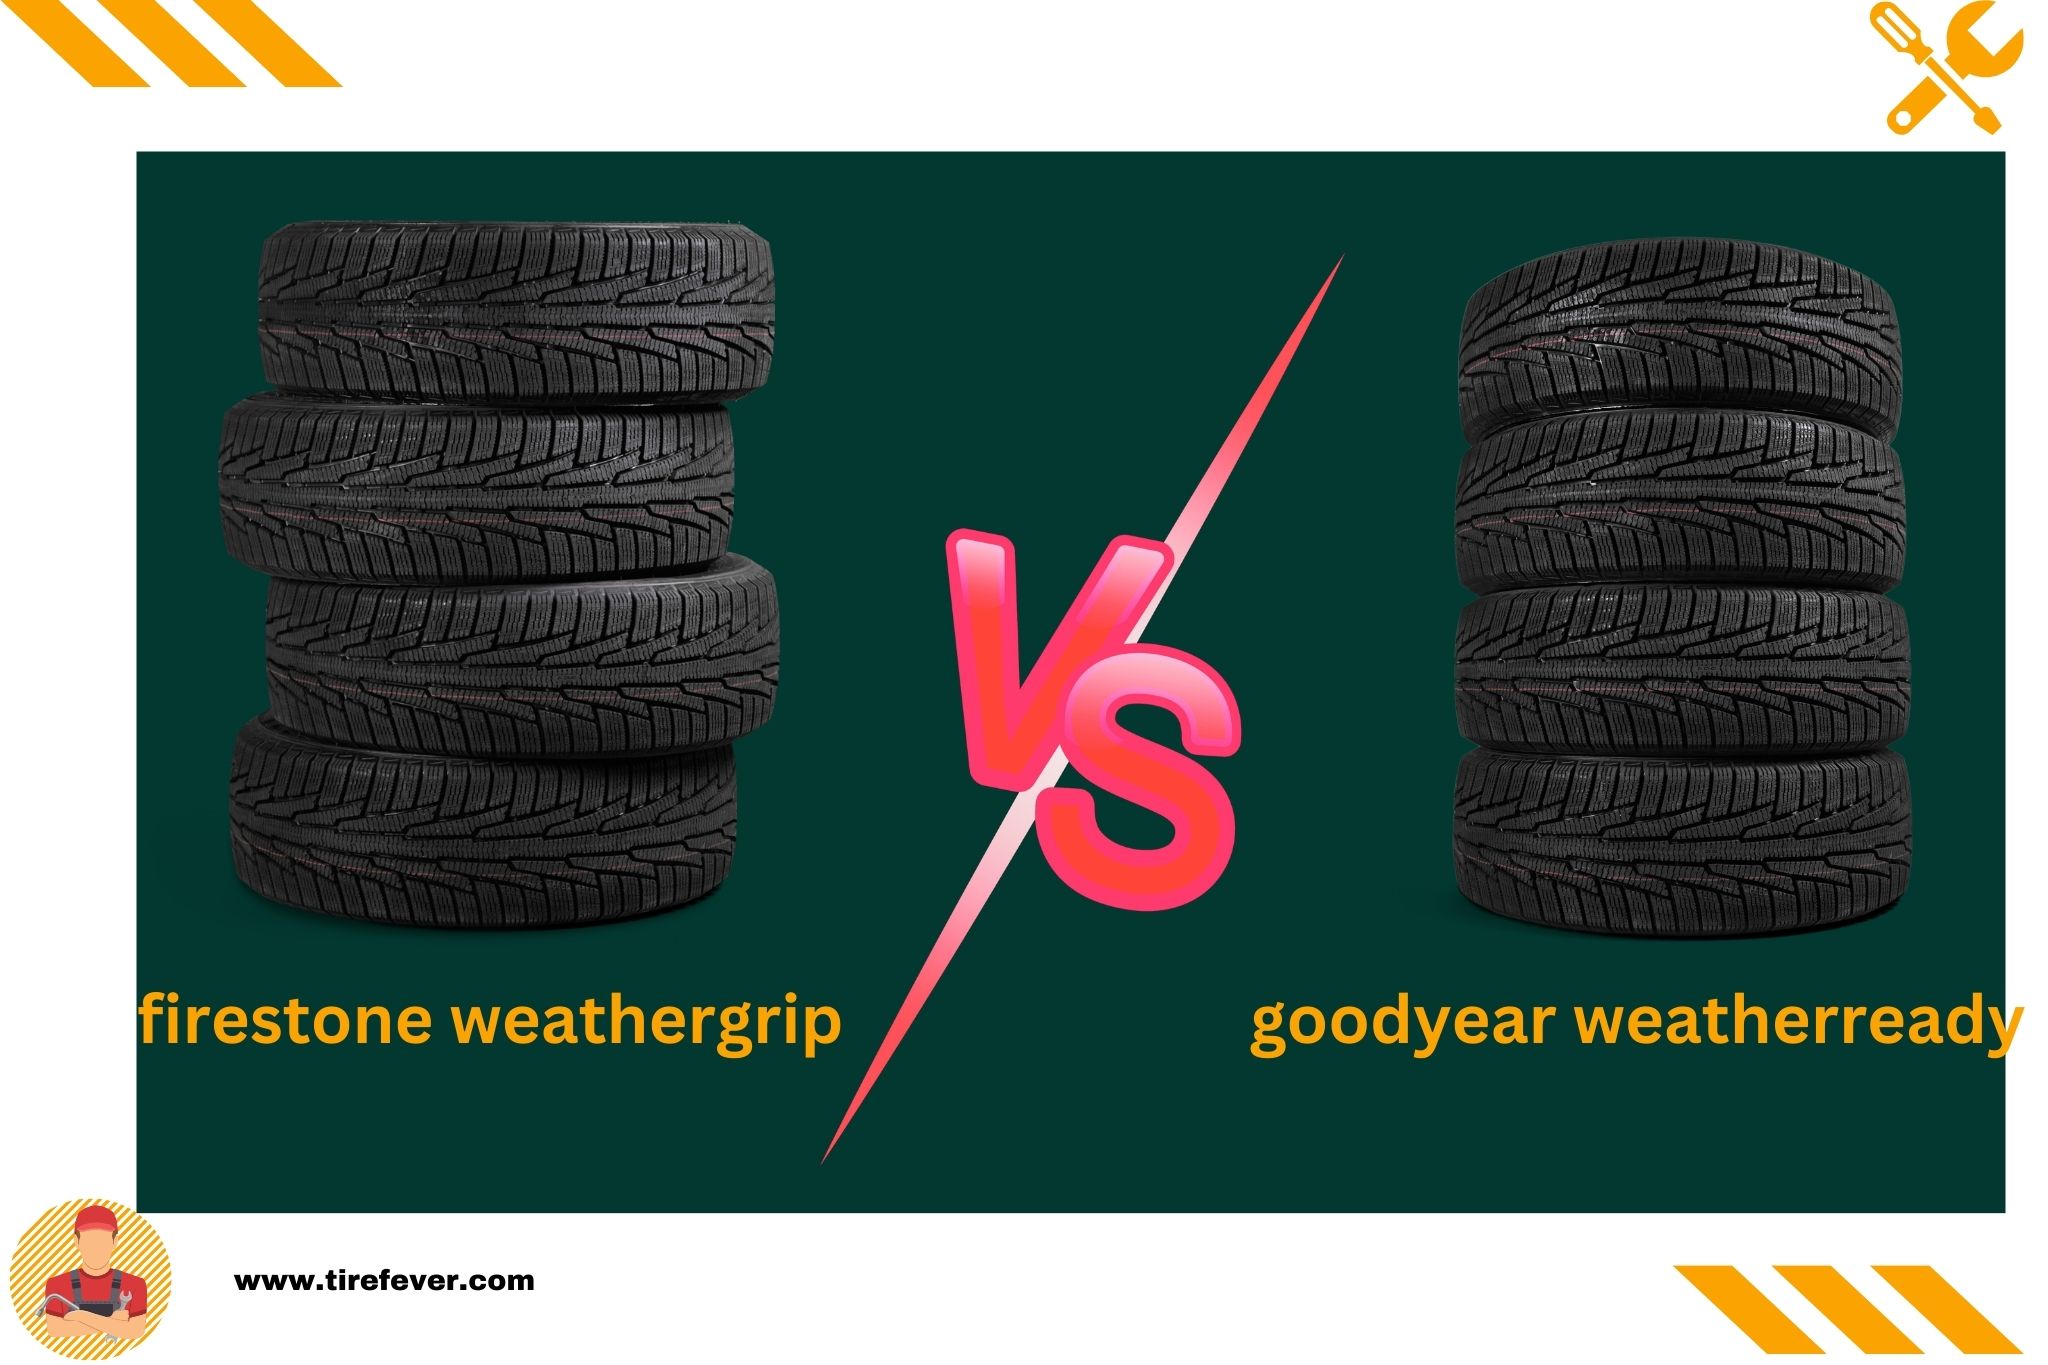 firestone weathergrip vs goodyear weatherready